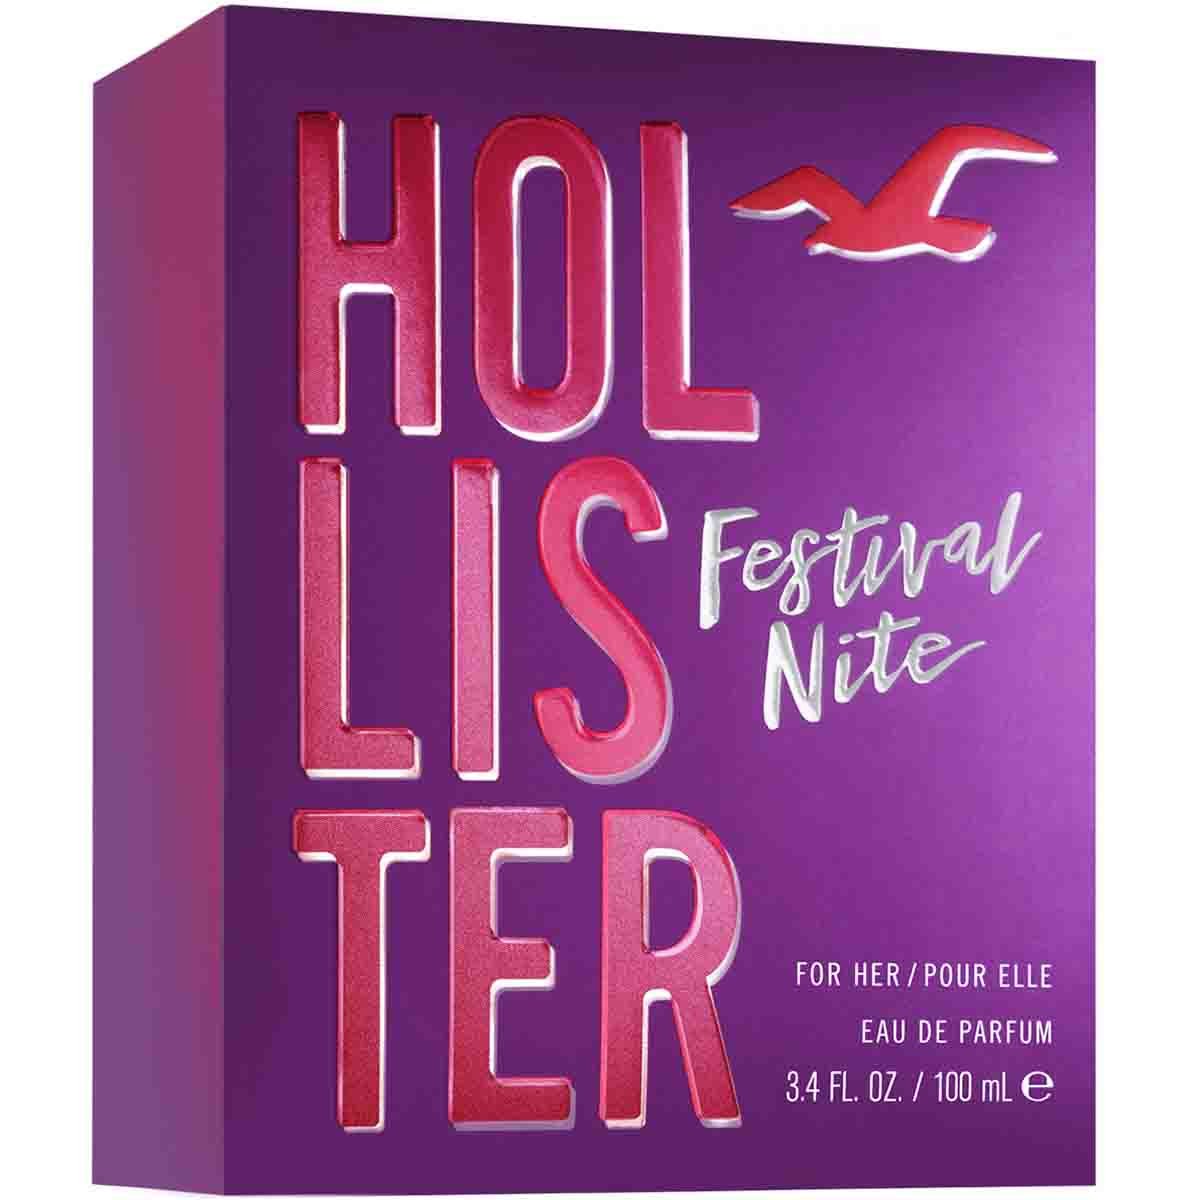 Fragancia para Mujer Hollister Festival Nite Edp 100 Ml